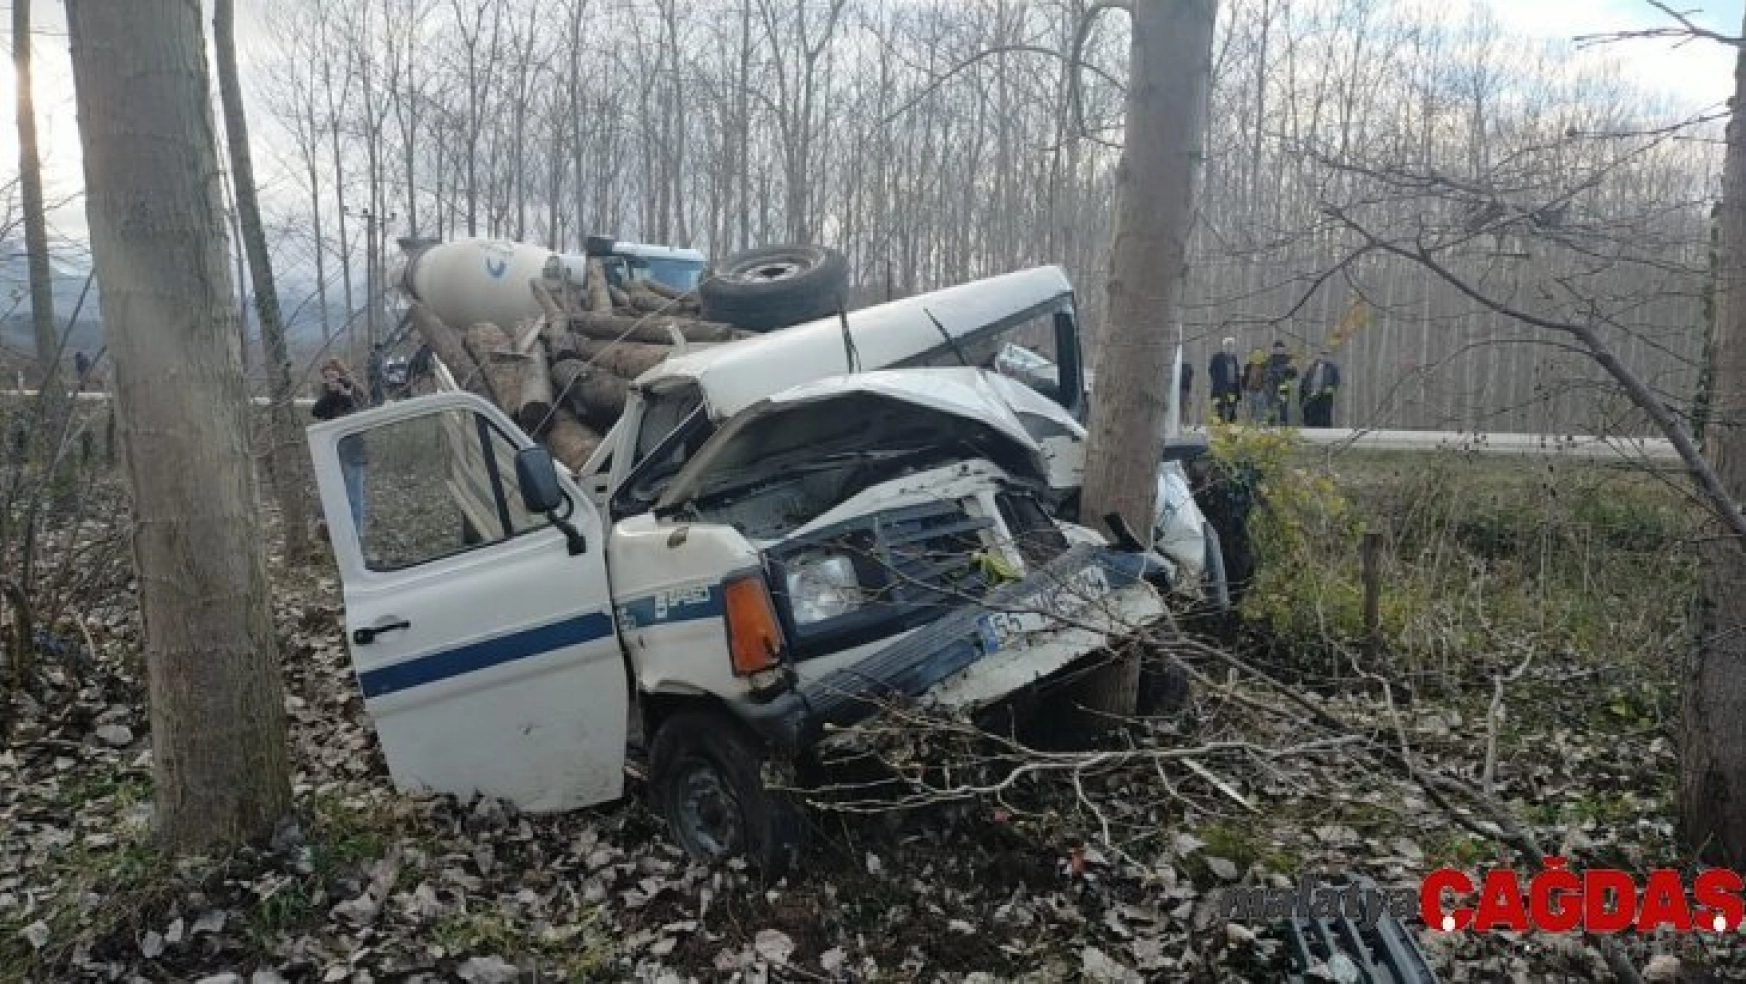 Odun yüklü kamyonet ağaca çarptı: 1'i ağır 3 yaralı